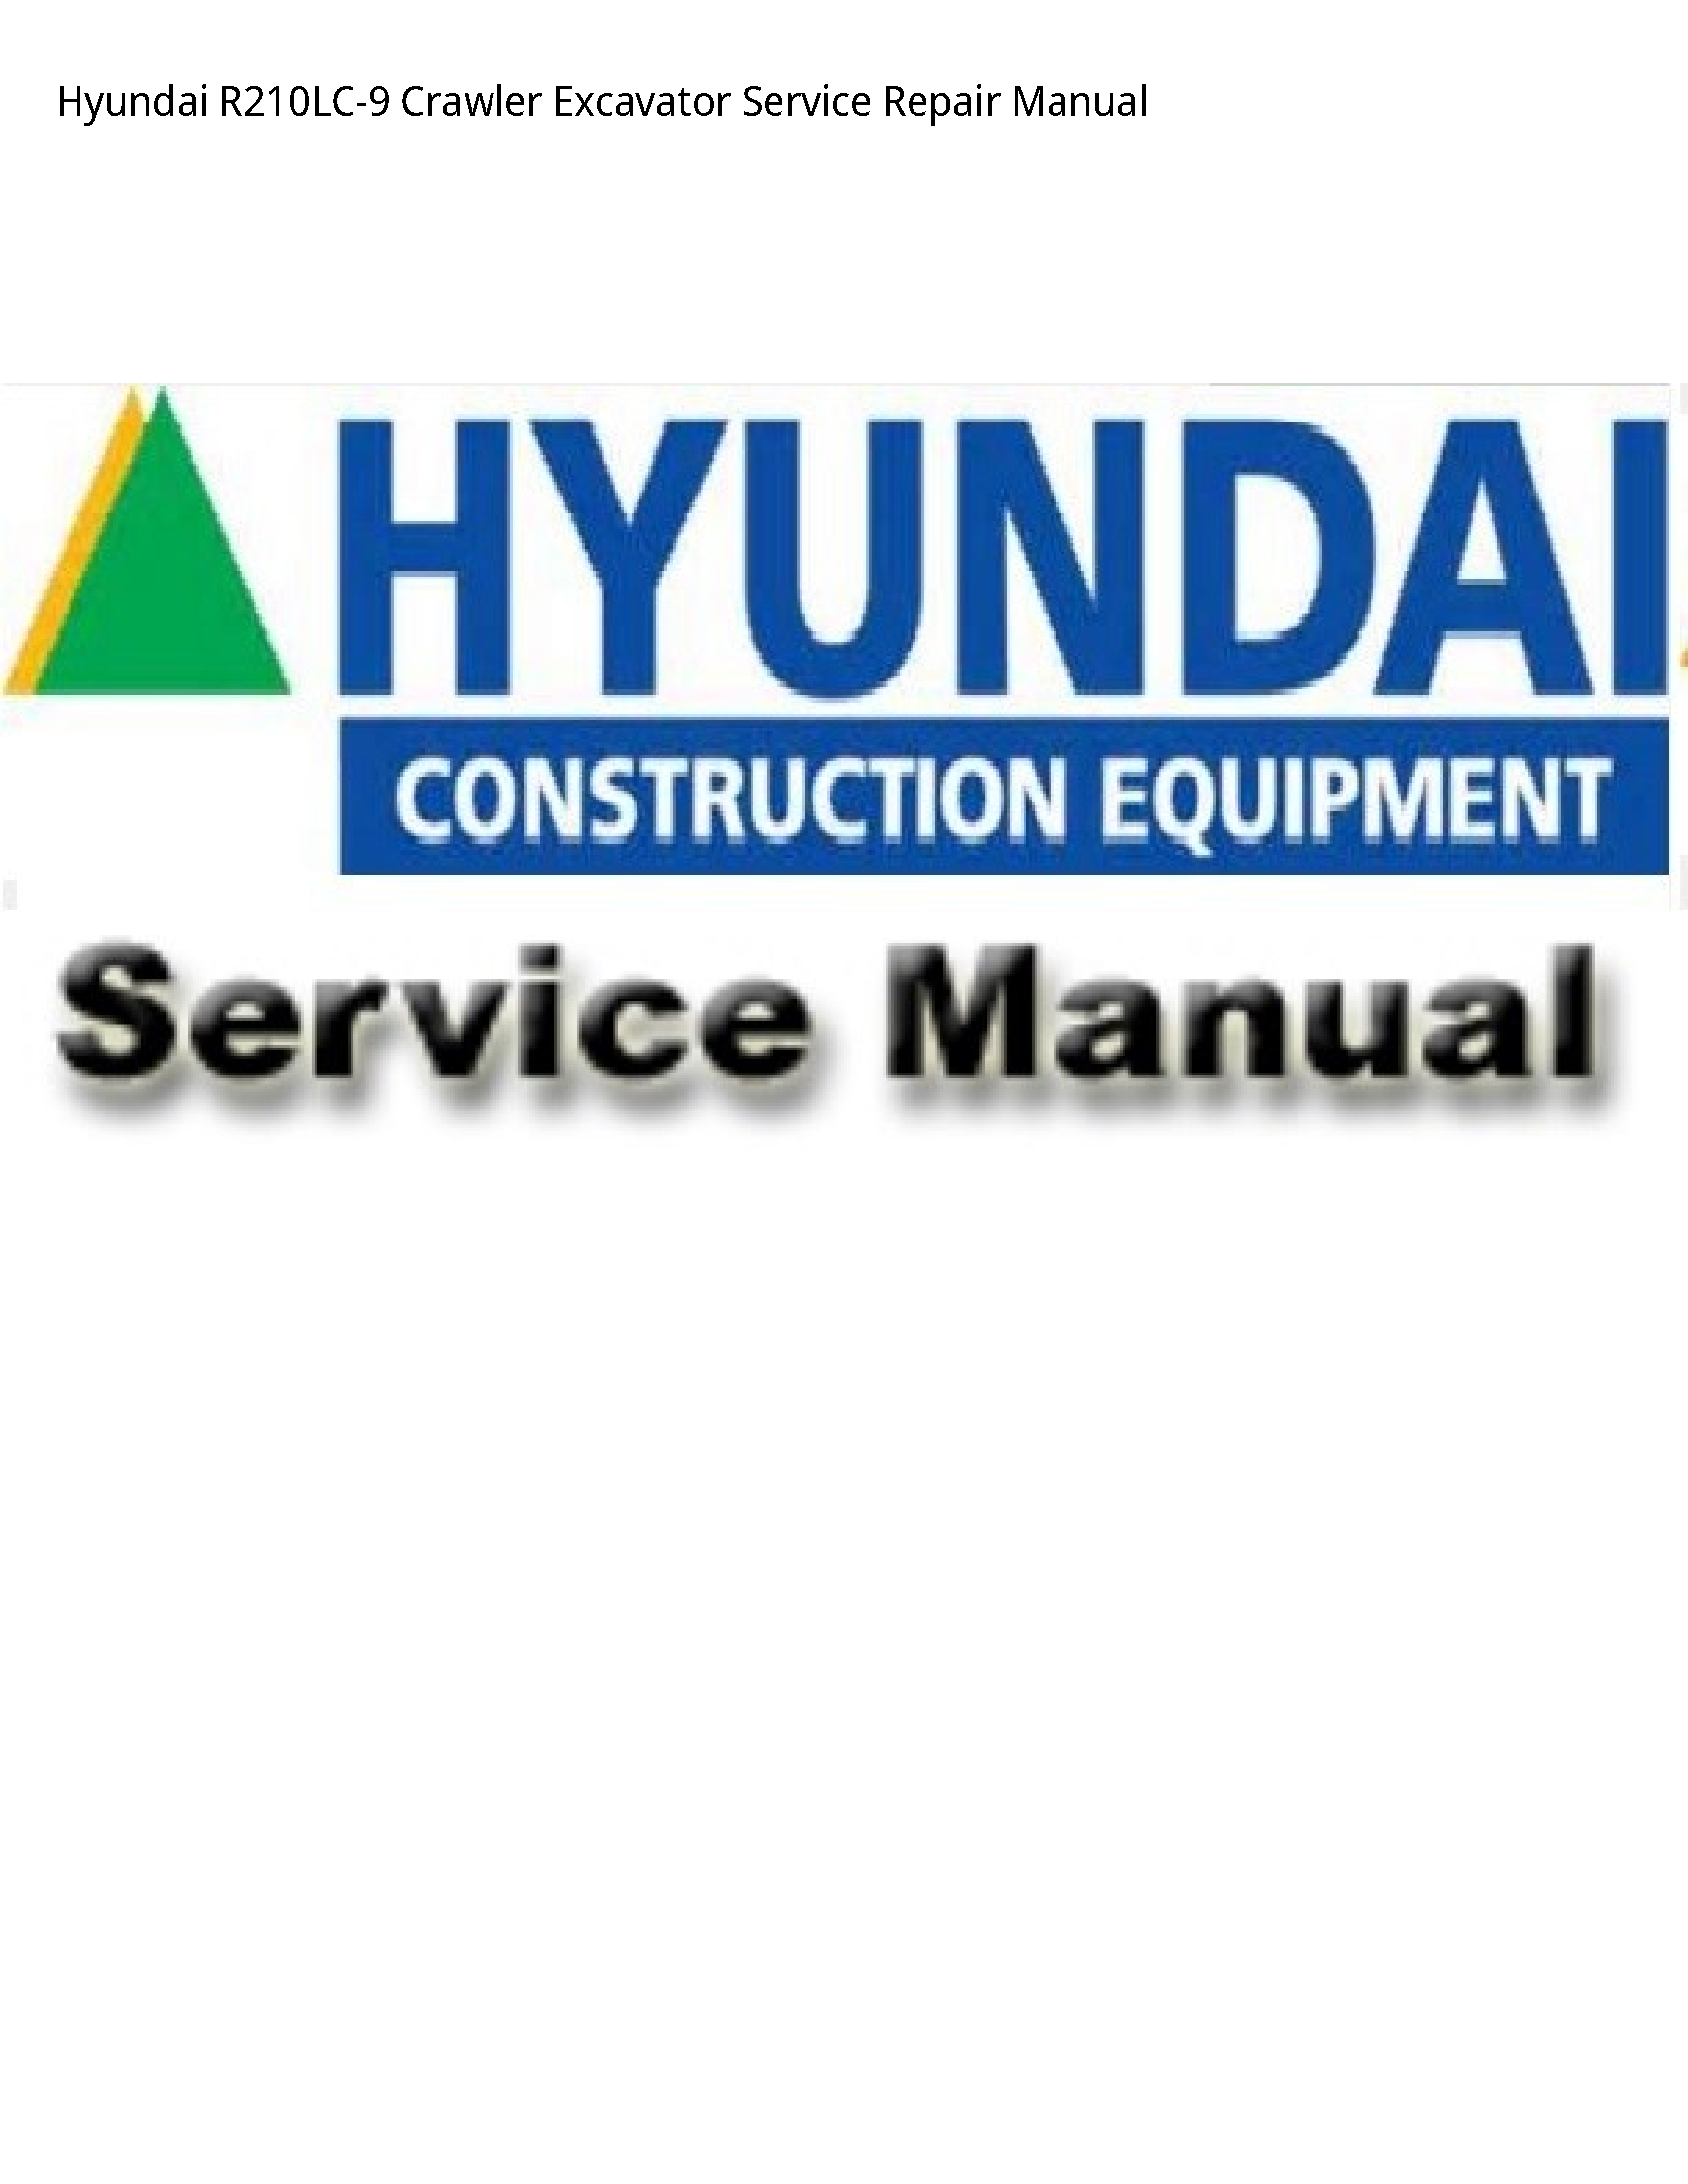 Hyundai R210LC-9 Crawler Excavator manual